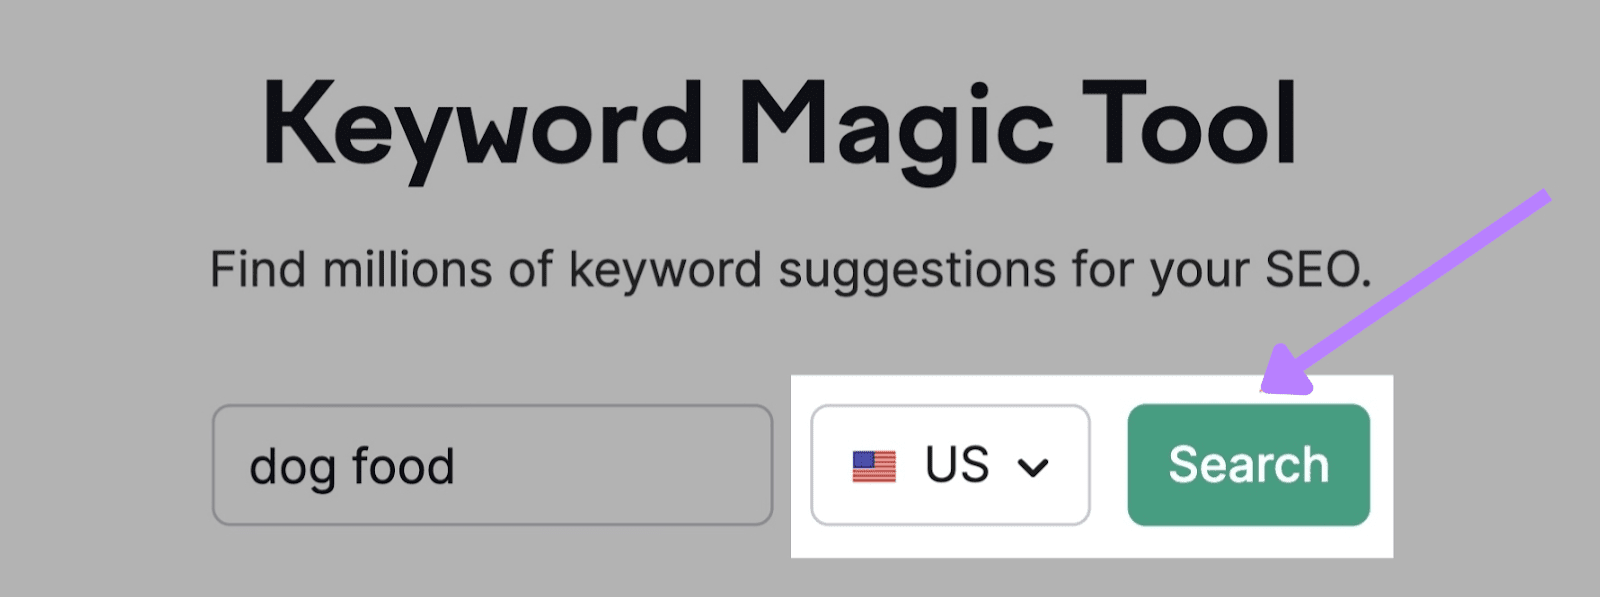 location set to "US" in Keyword Magic Tool